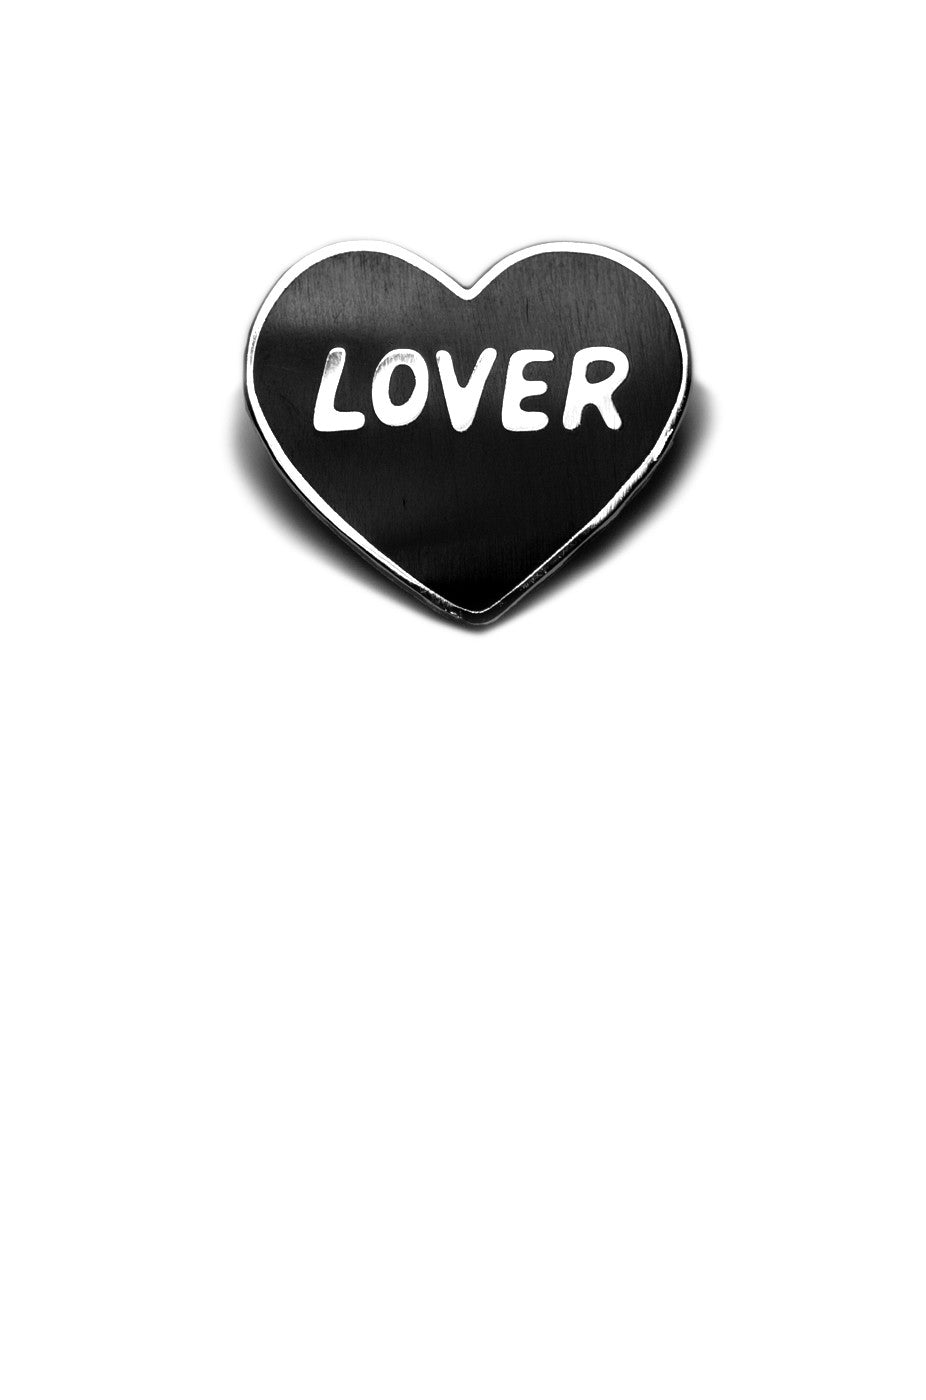 Pin on love